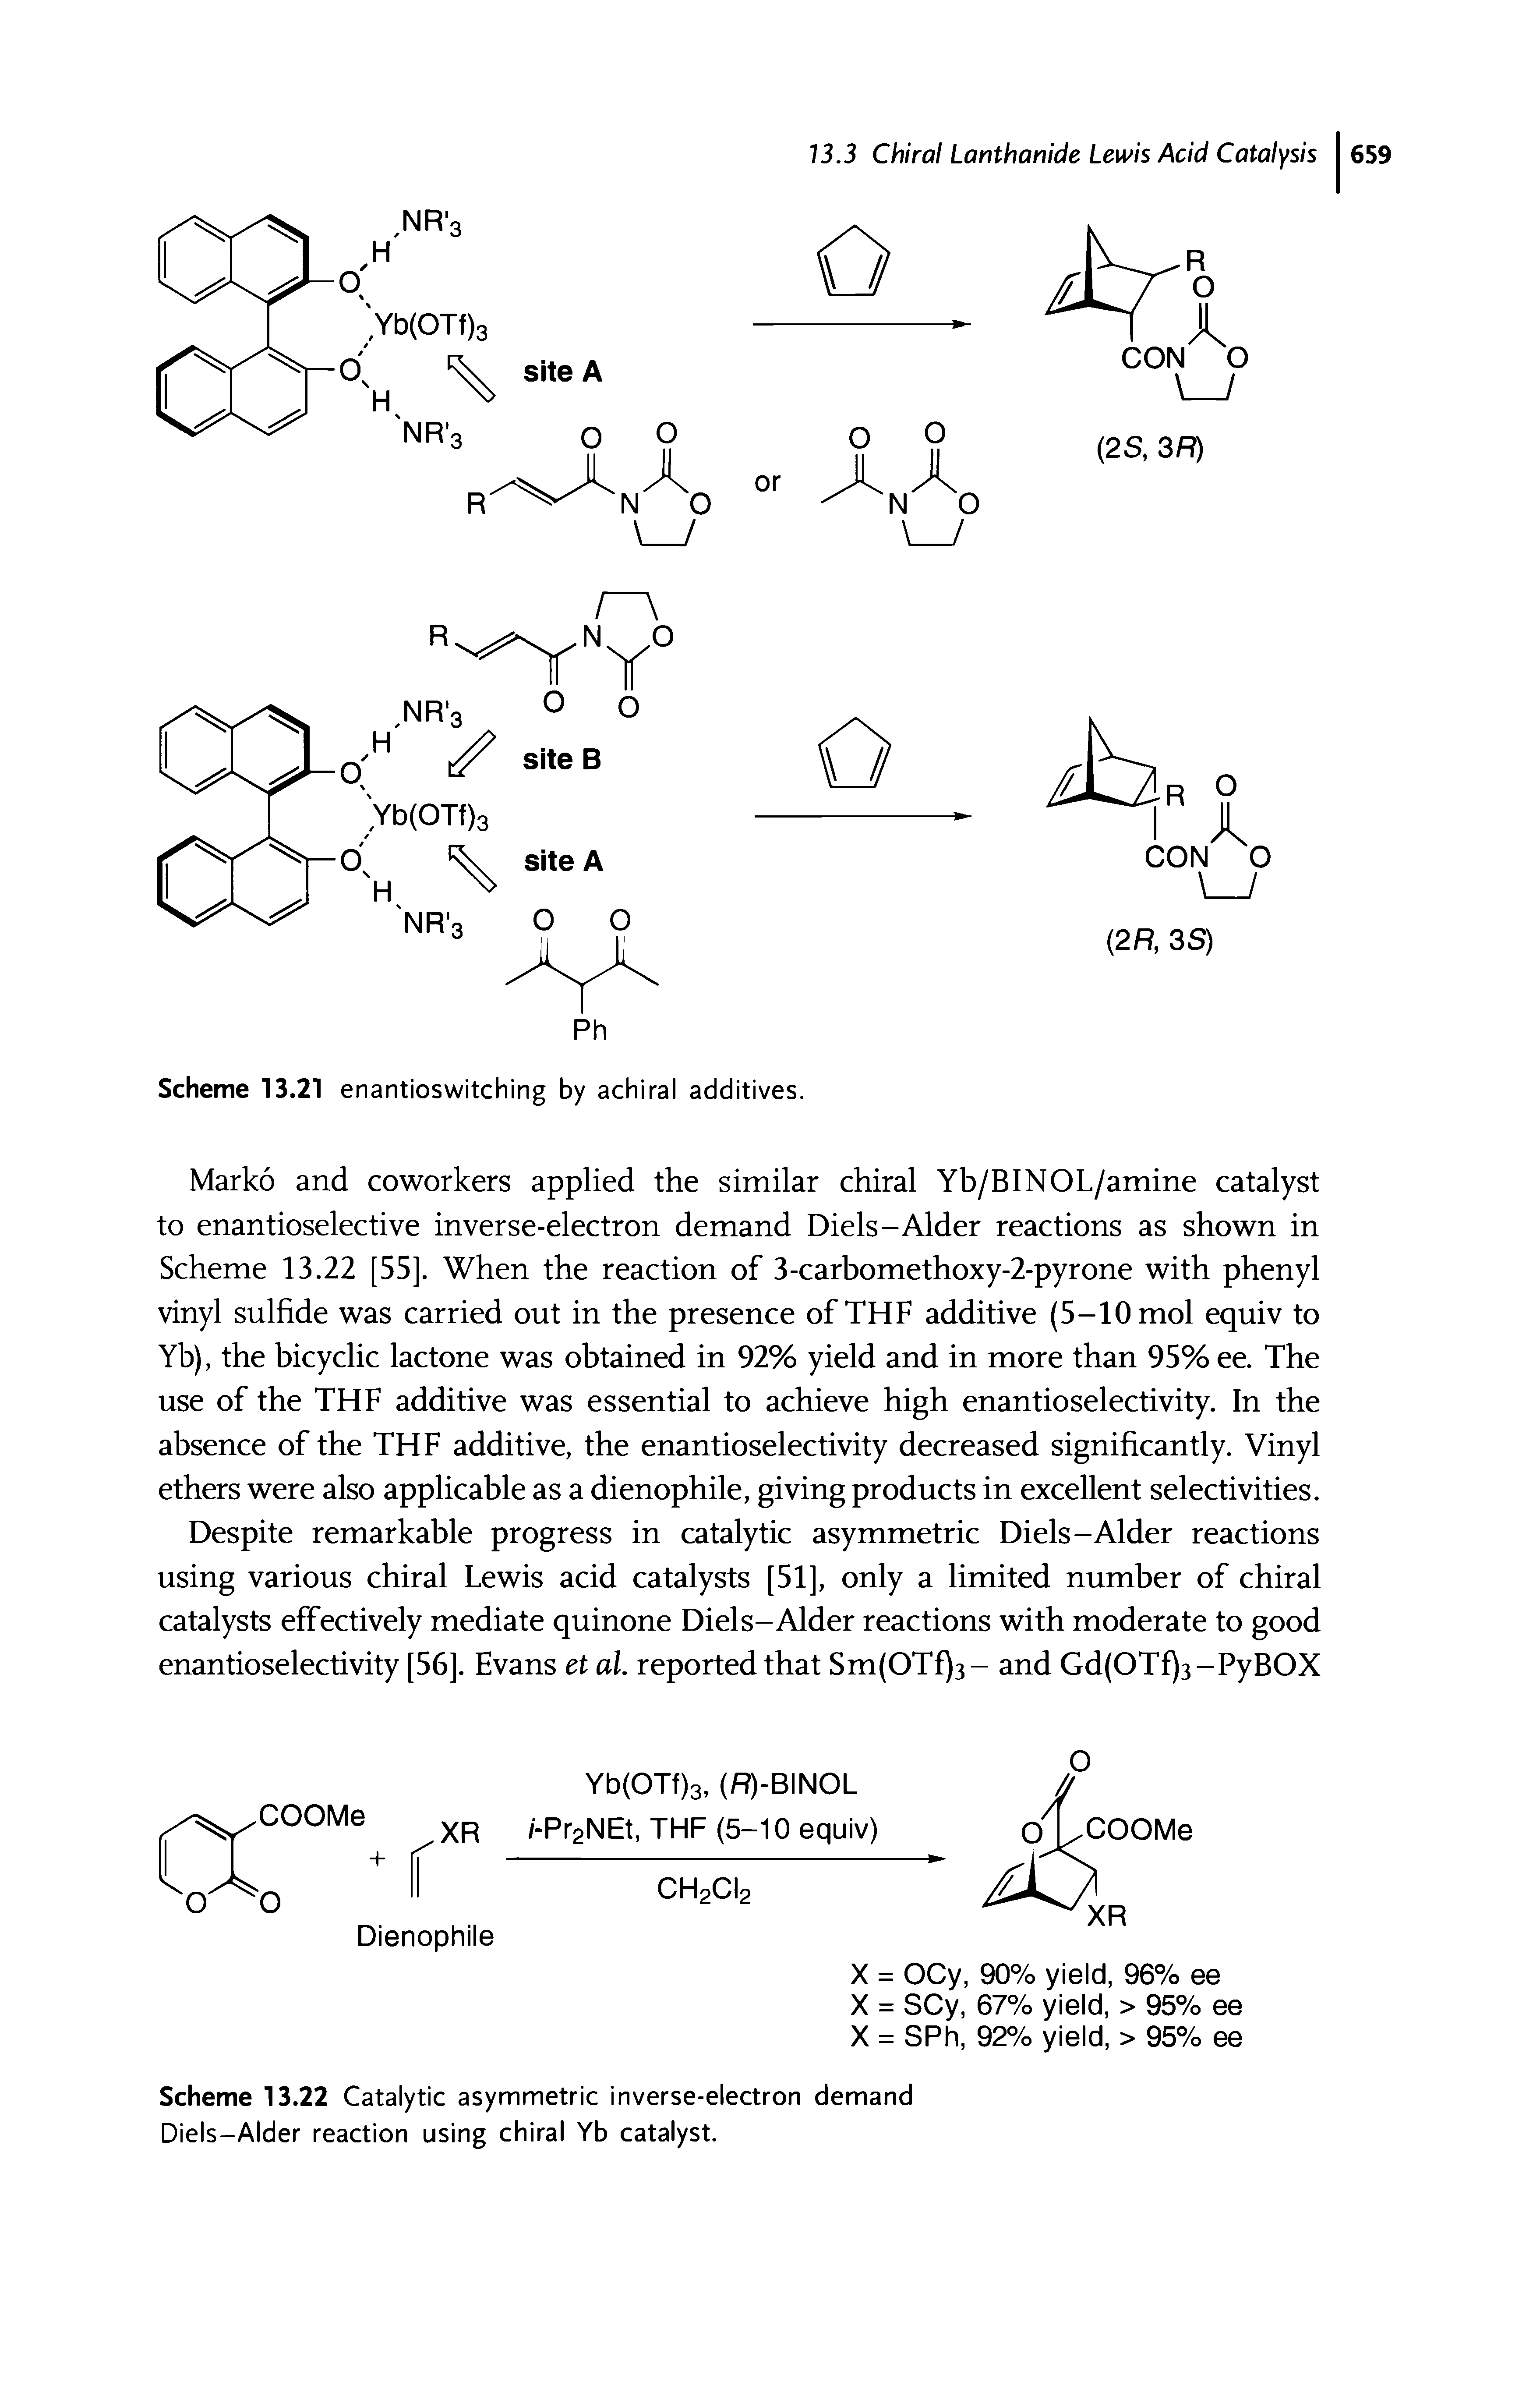 Scheme 13.22 Catalytic asymmetric inverse-electron demand Diels-Alder reaction using chiral Yb catalyst.